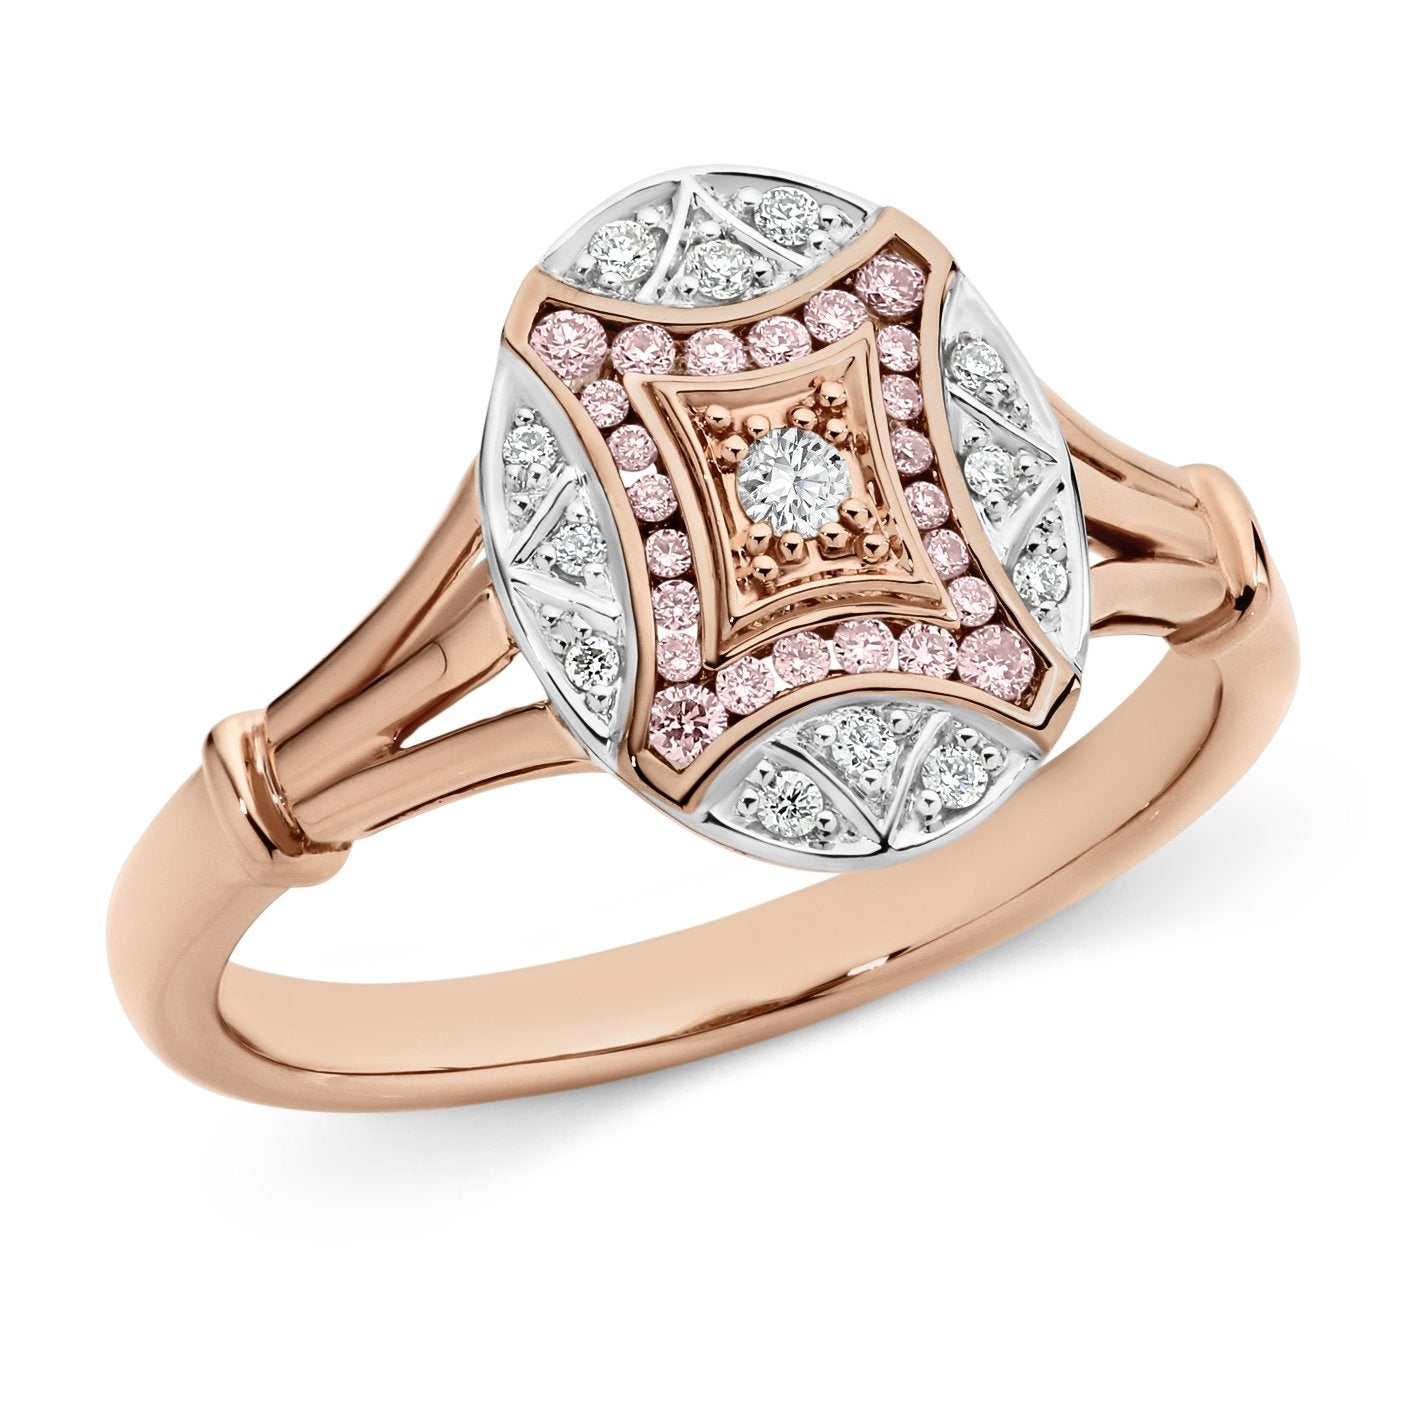 PINK CAVIAR 0.206ct Pink Diamond Ring in 9ct Rose & White Gold